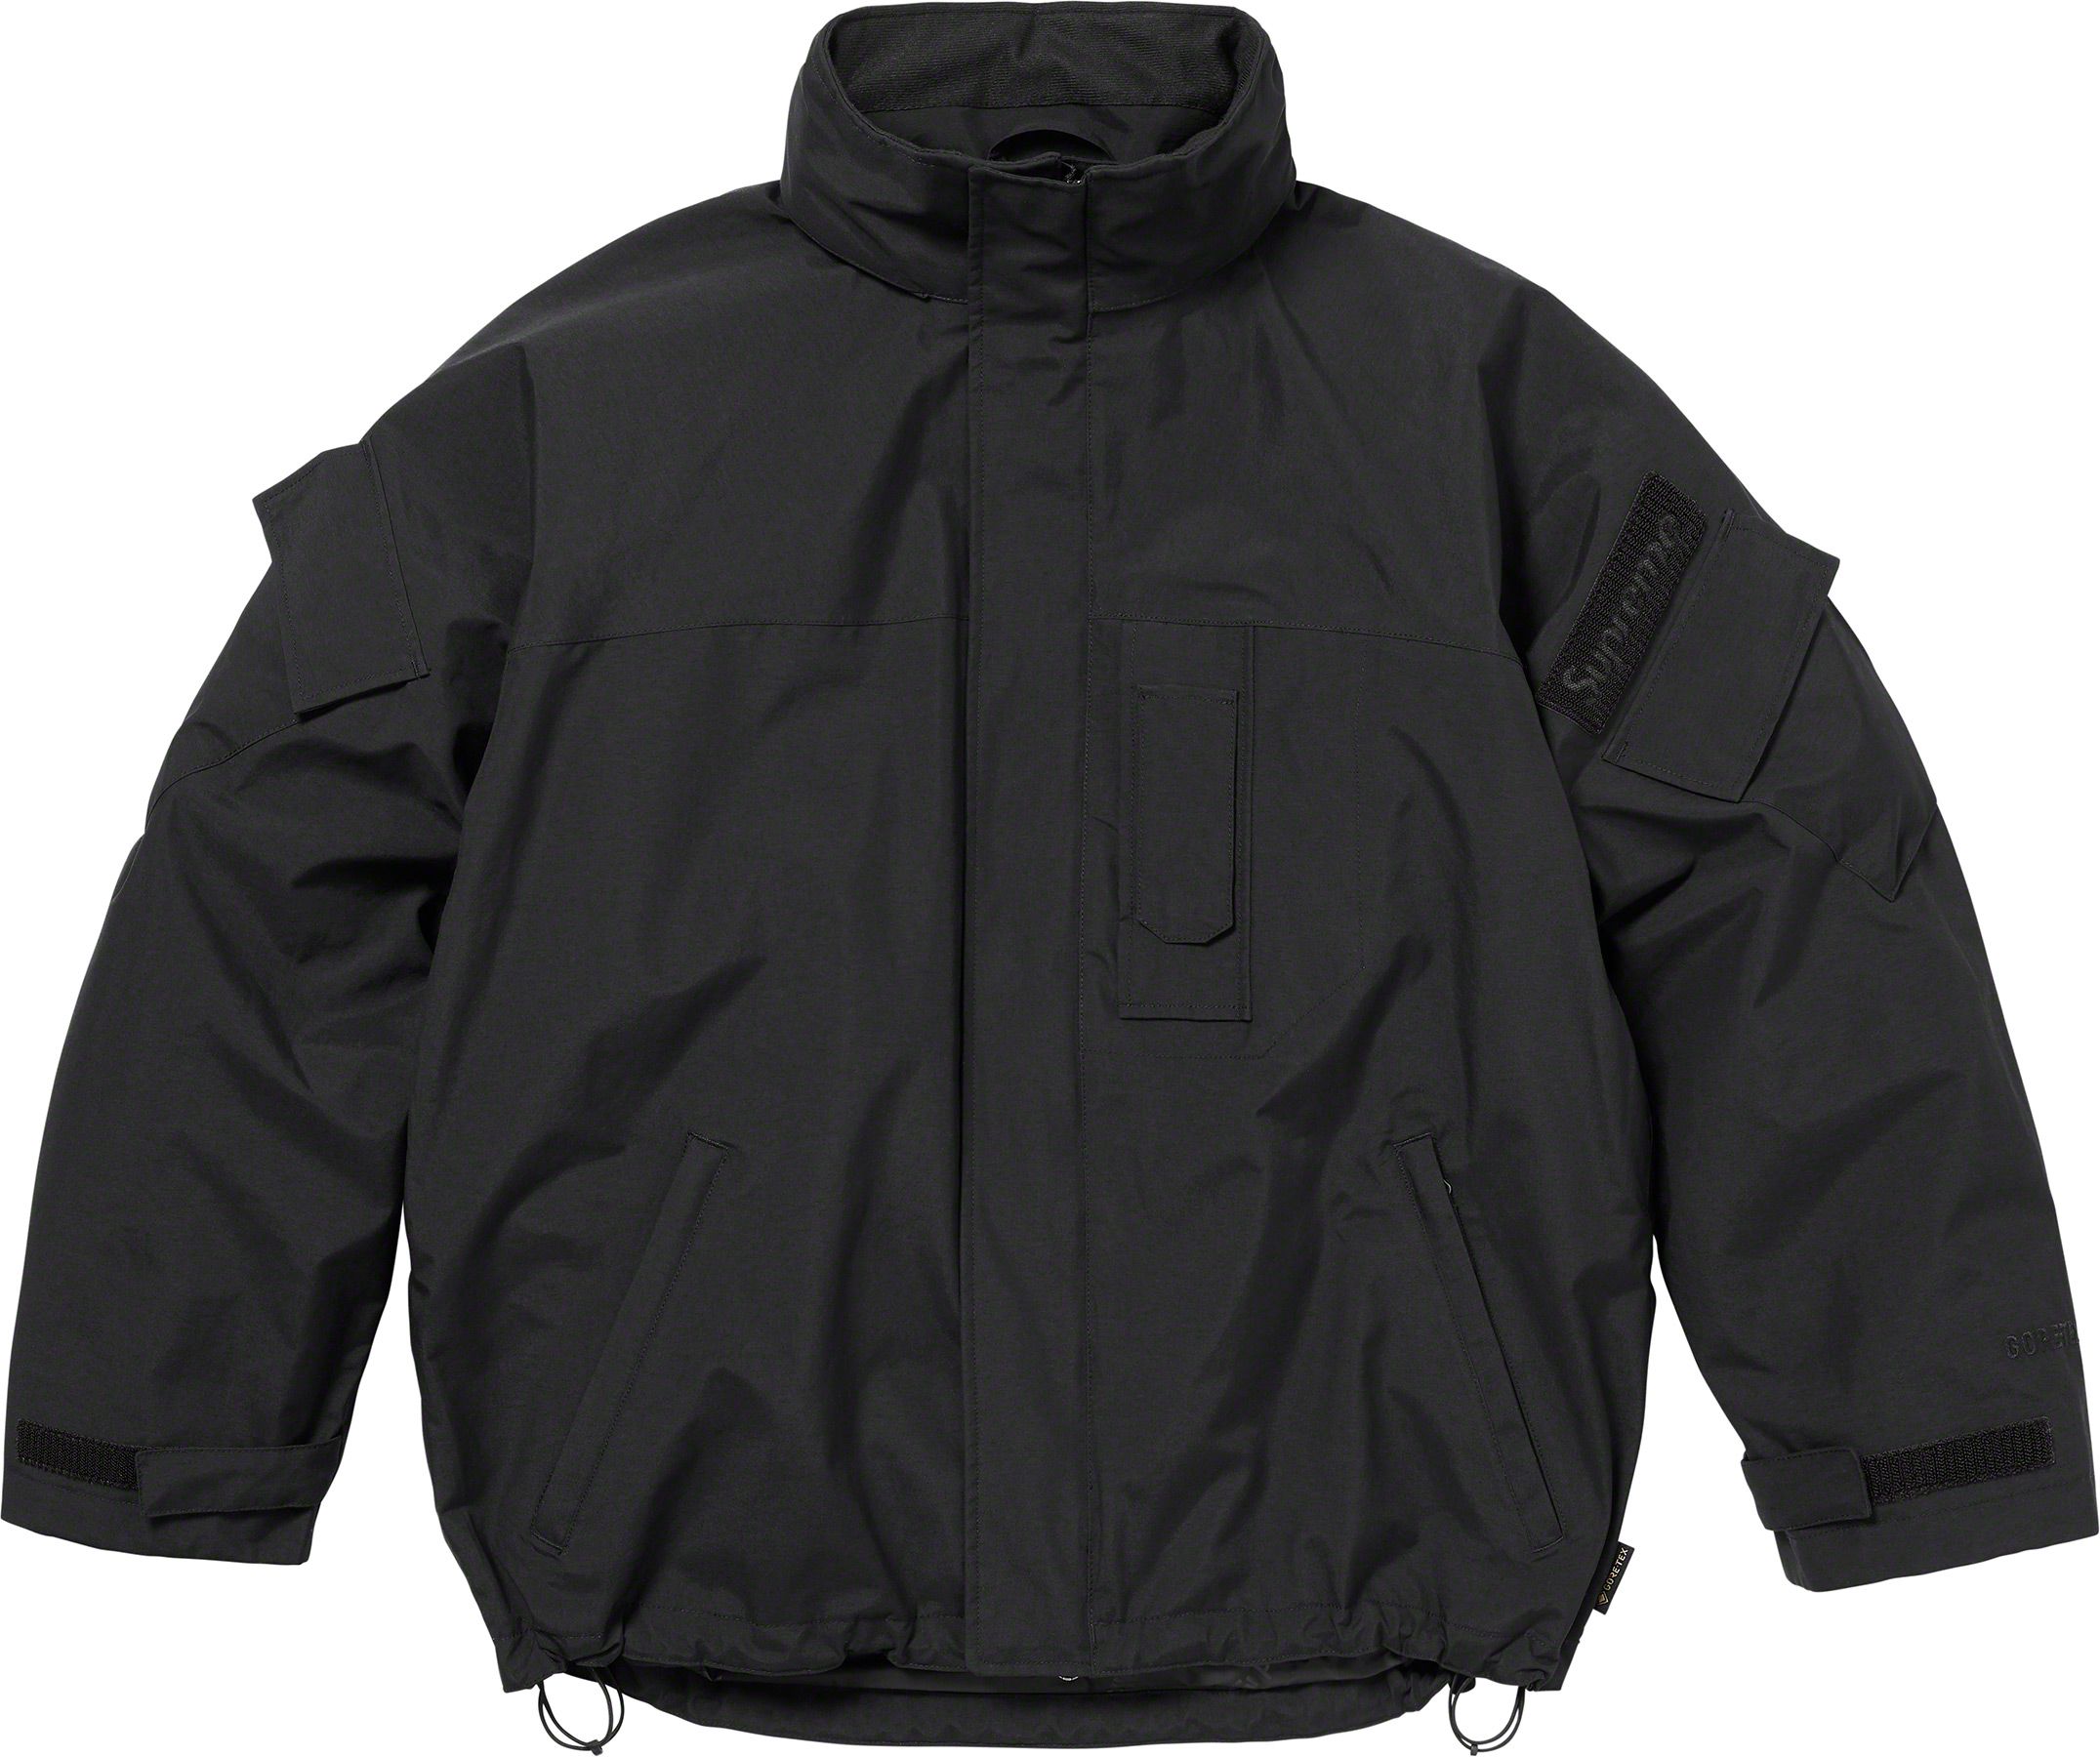 2-in-1 GORE-TEX Polartec® Liner Jacket - Supreme